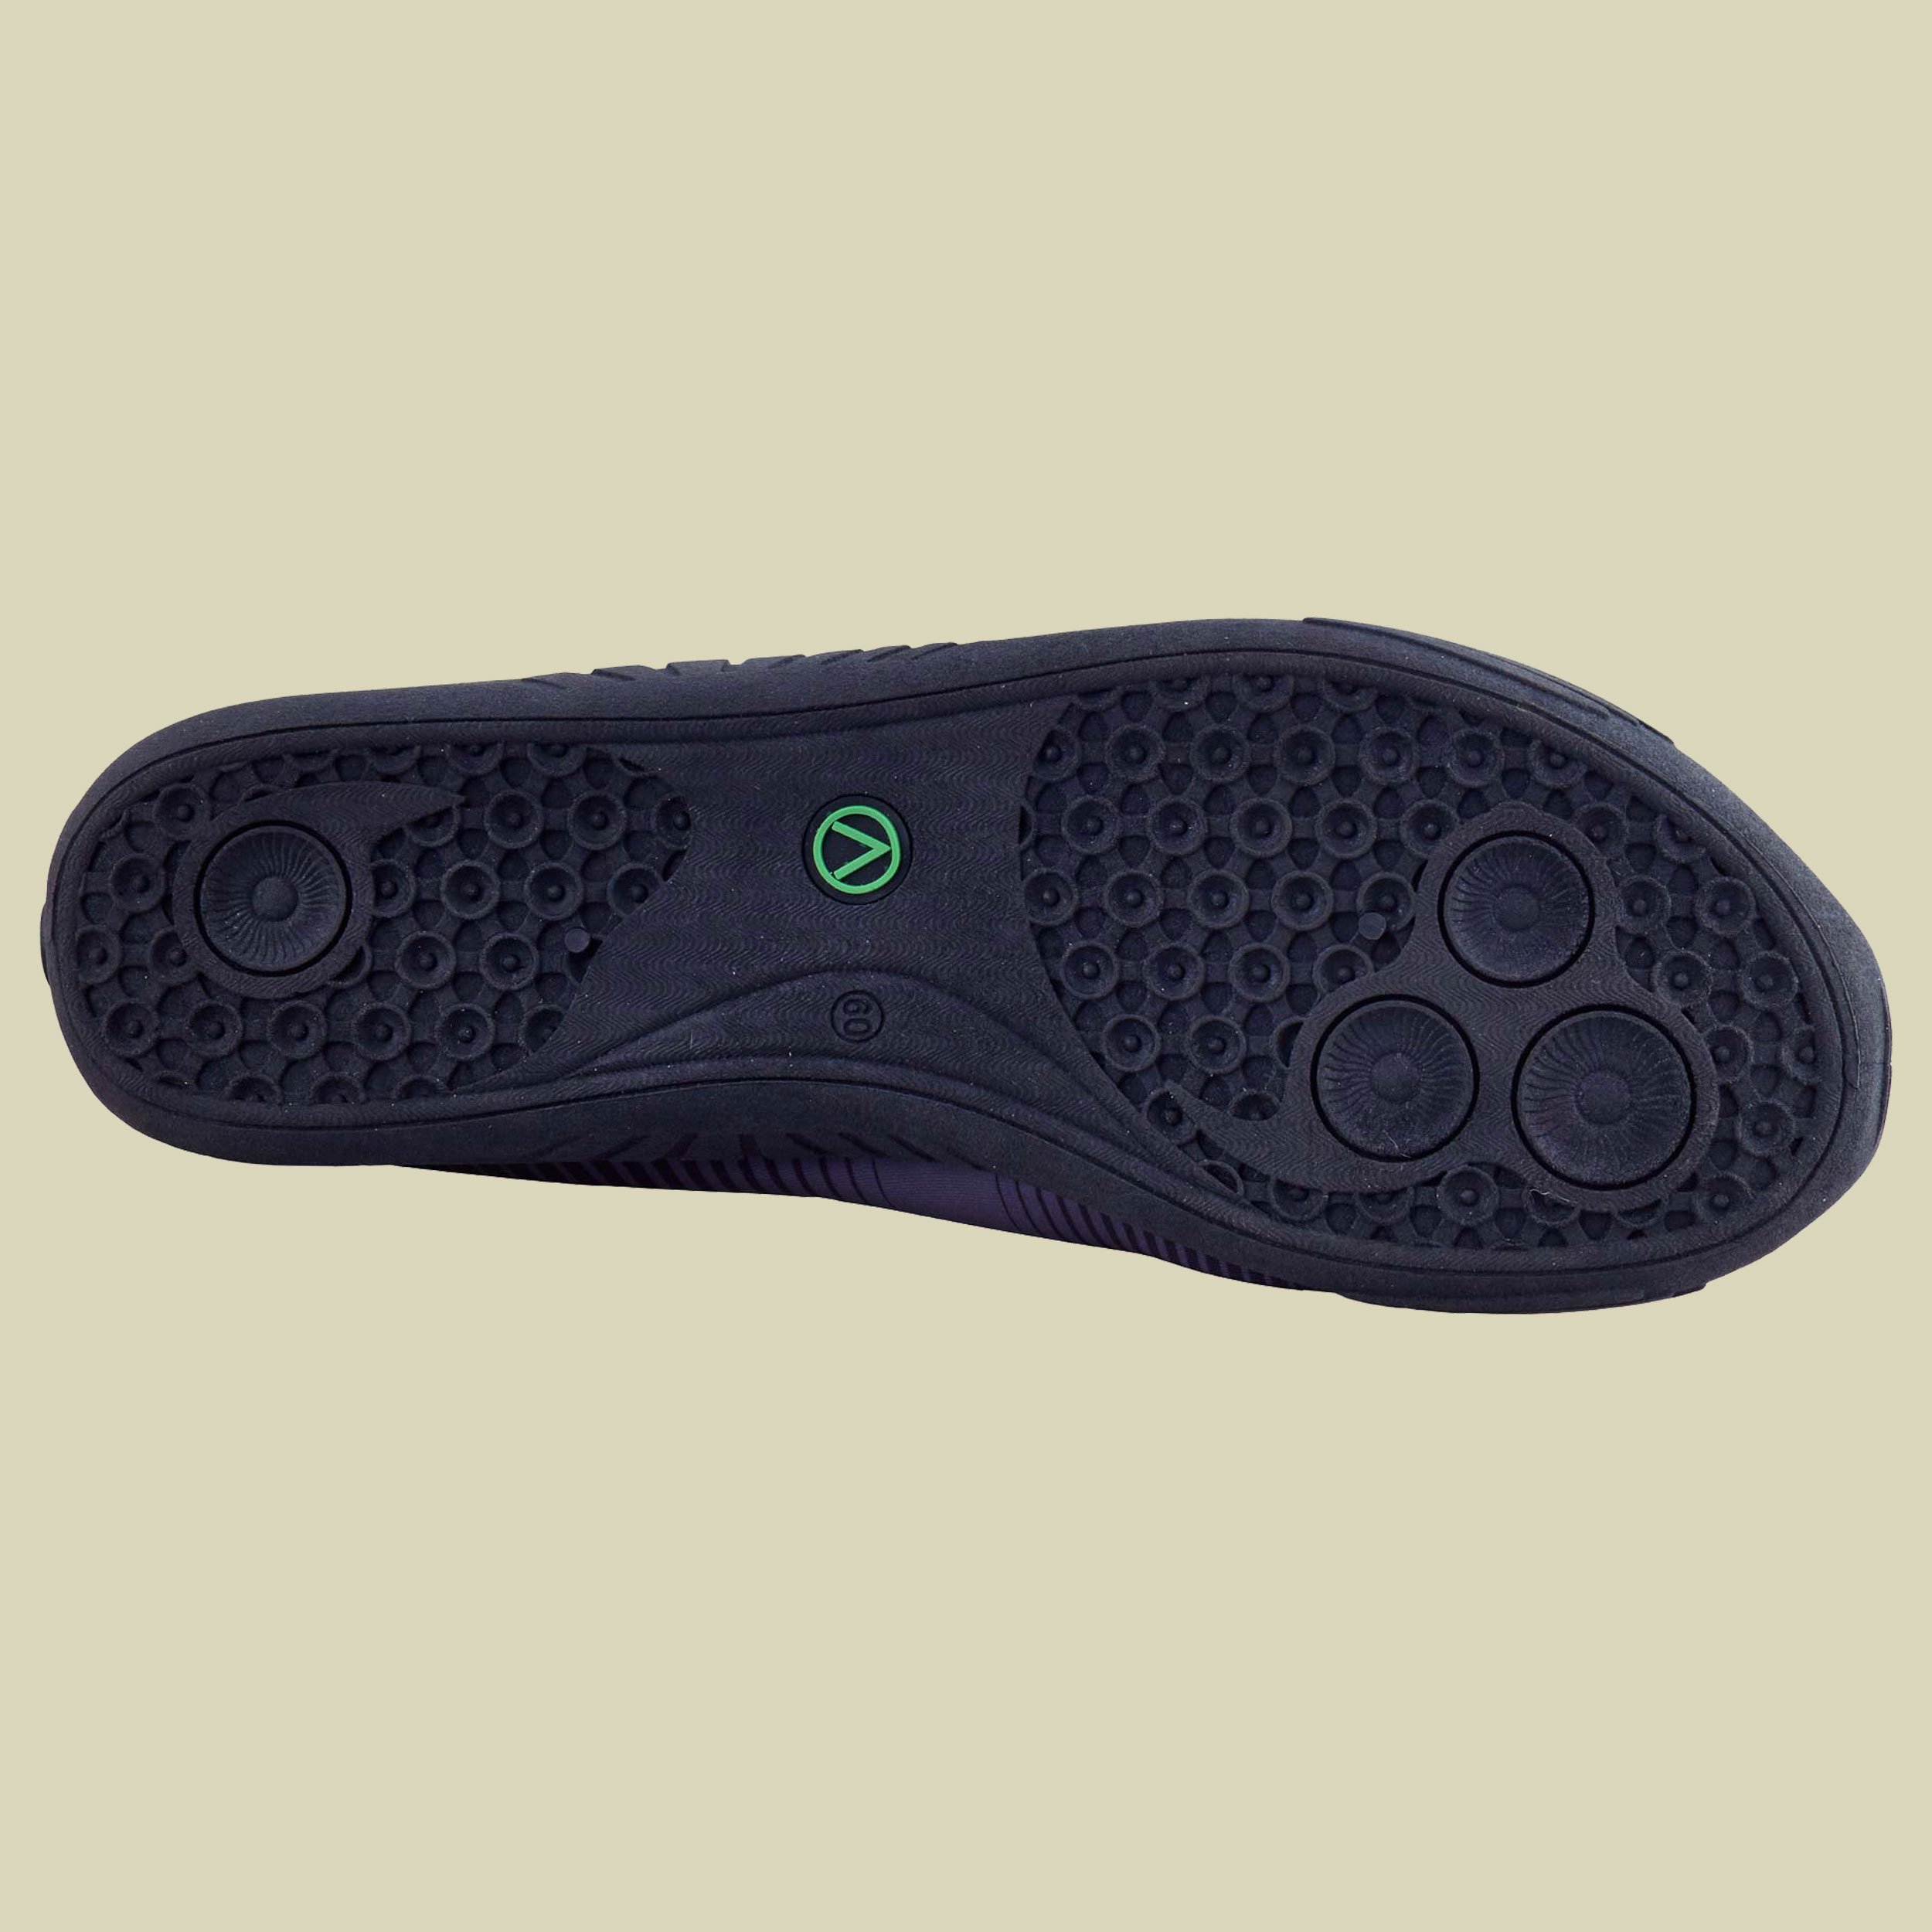 Spartan Barfuß-Schuhe Größe 45,5-46 Farbe astro black